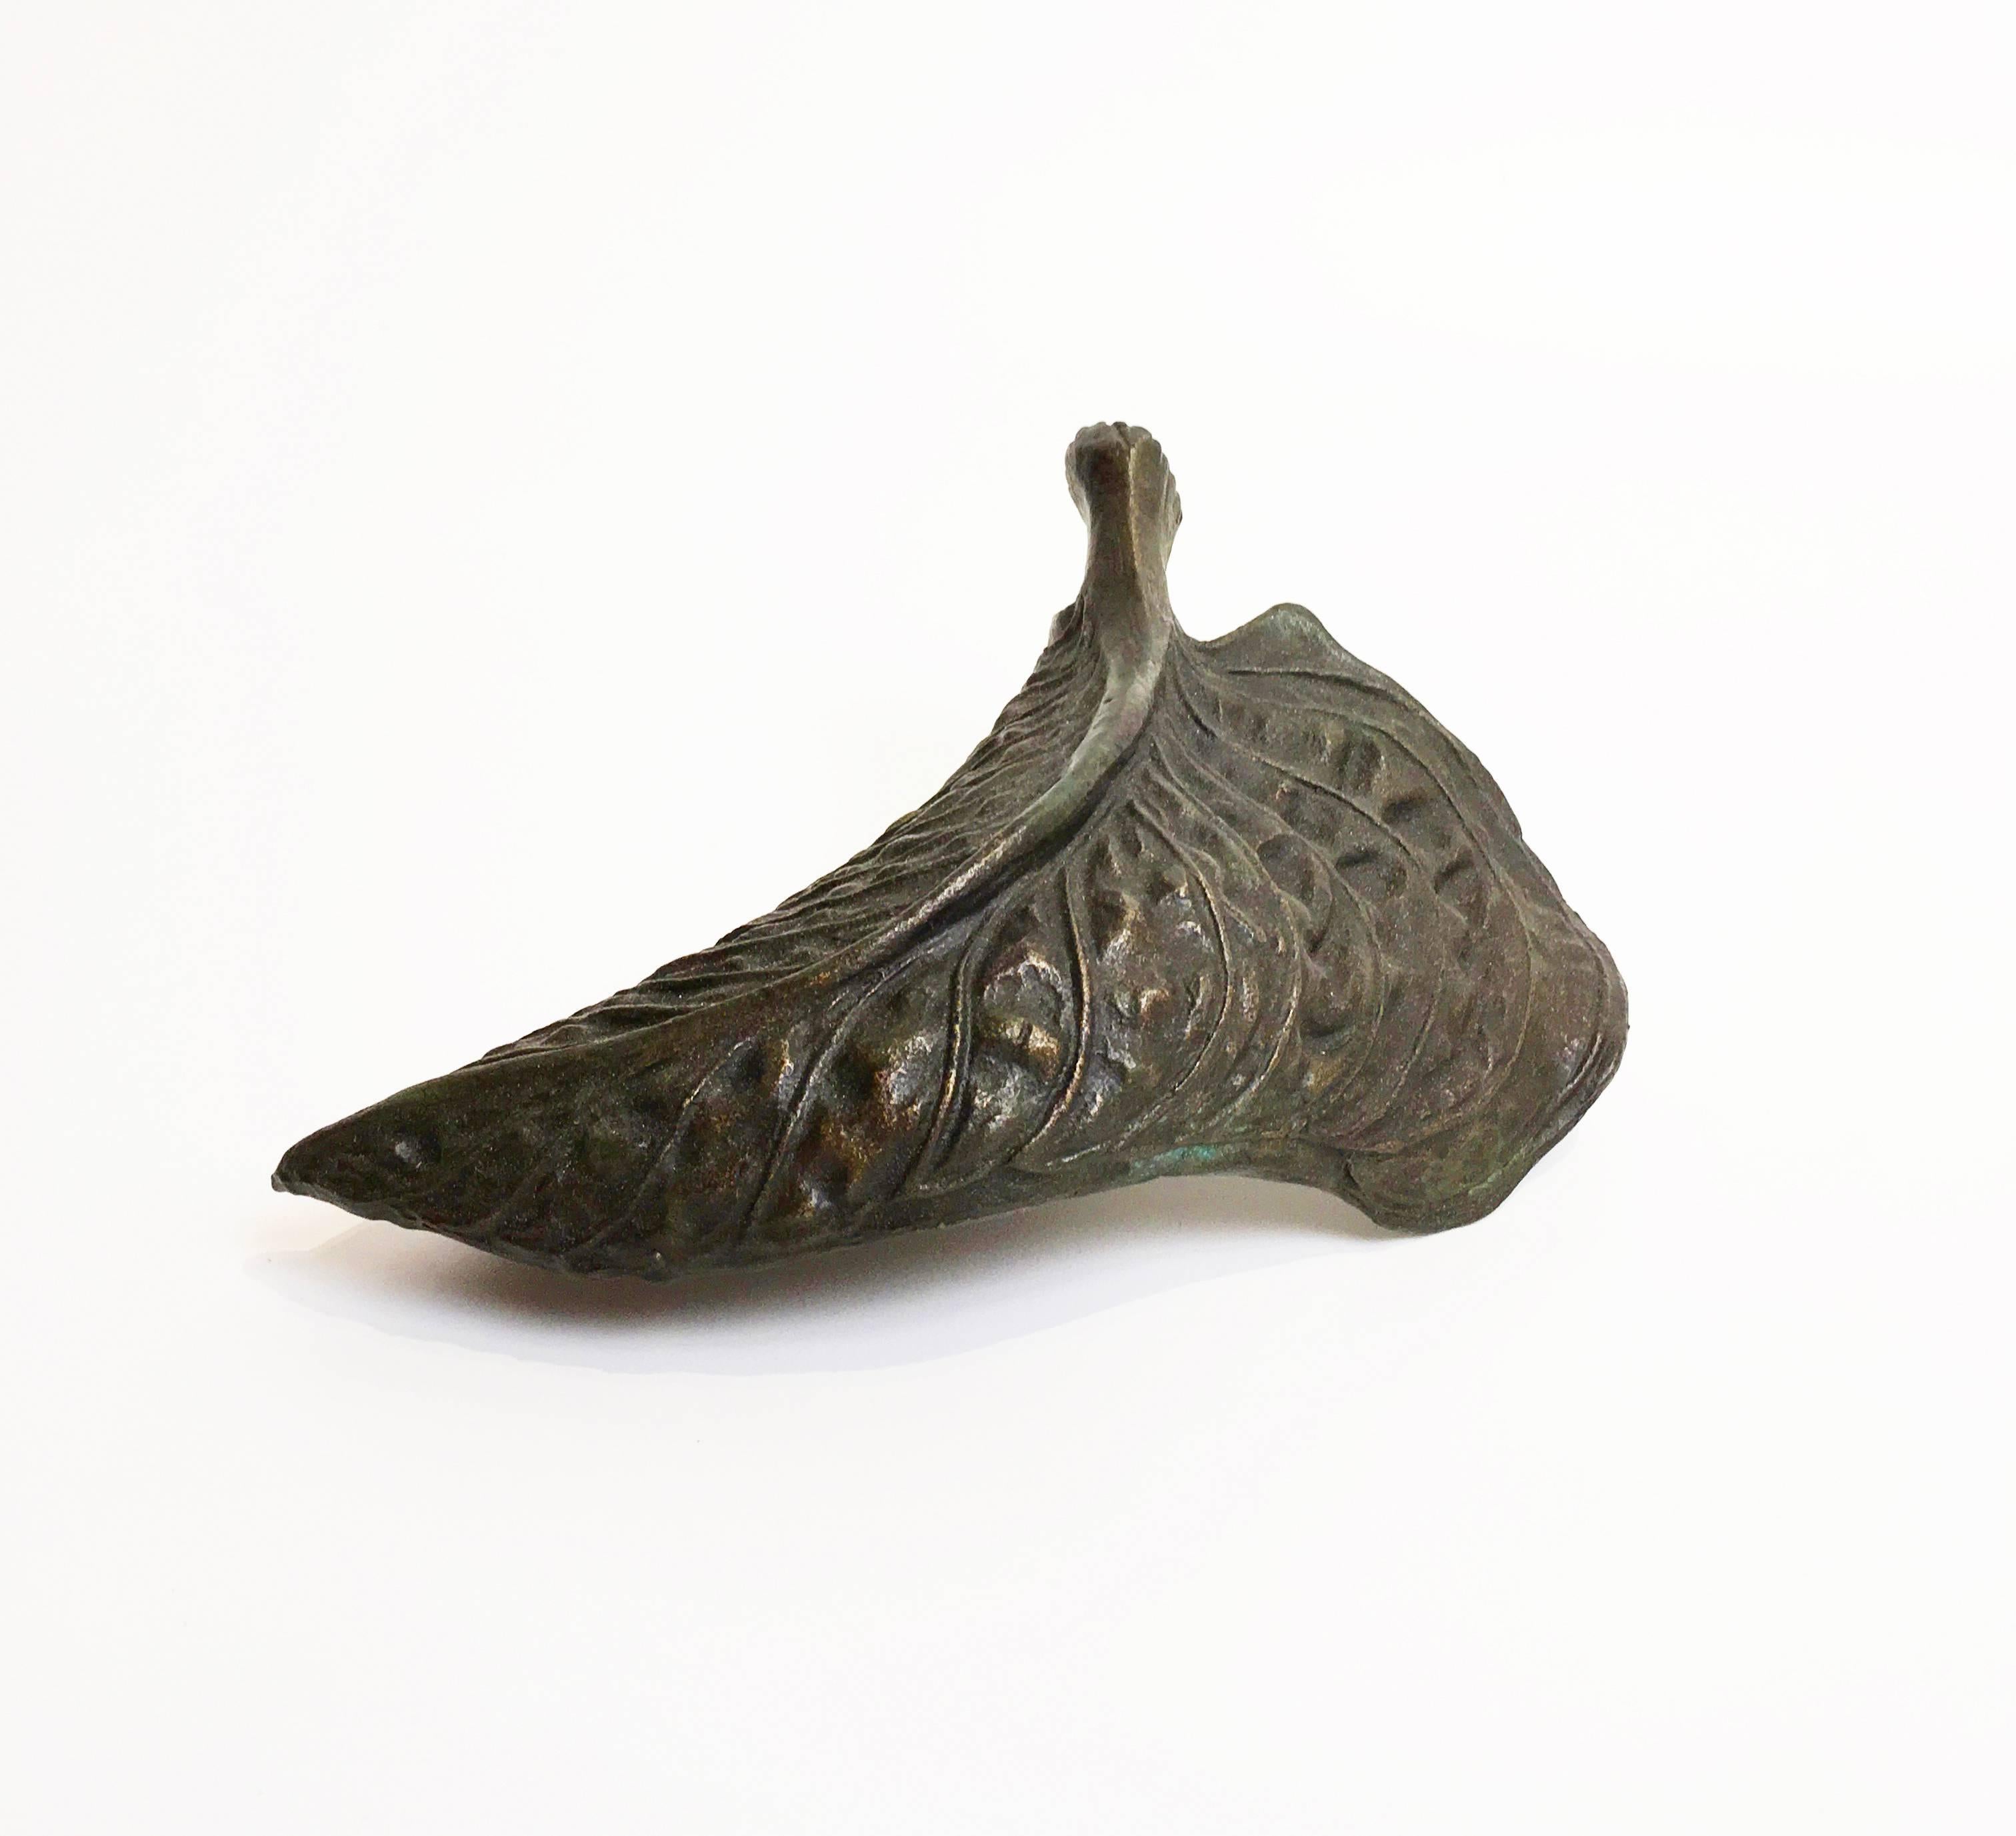 Hosta Leaf, bronze sculpture - Realist Sculpture by Sylvia Beckman